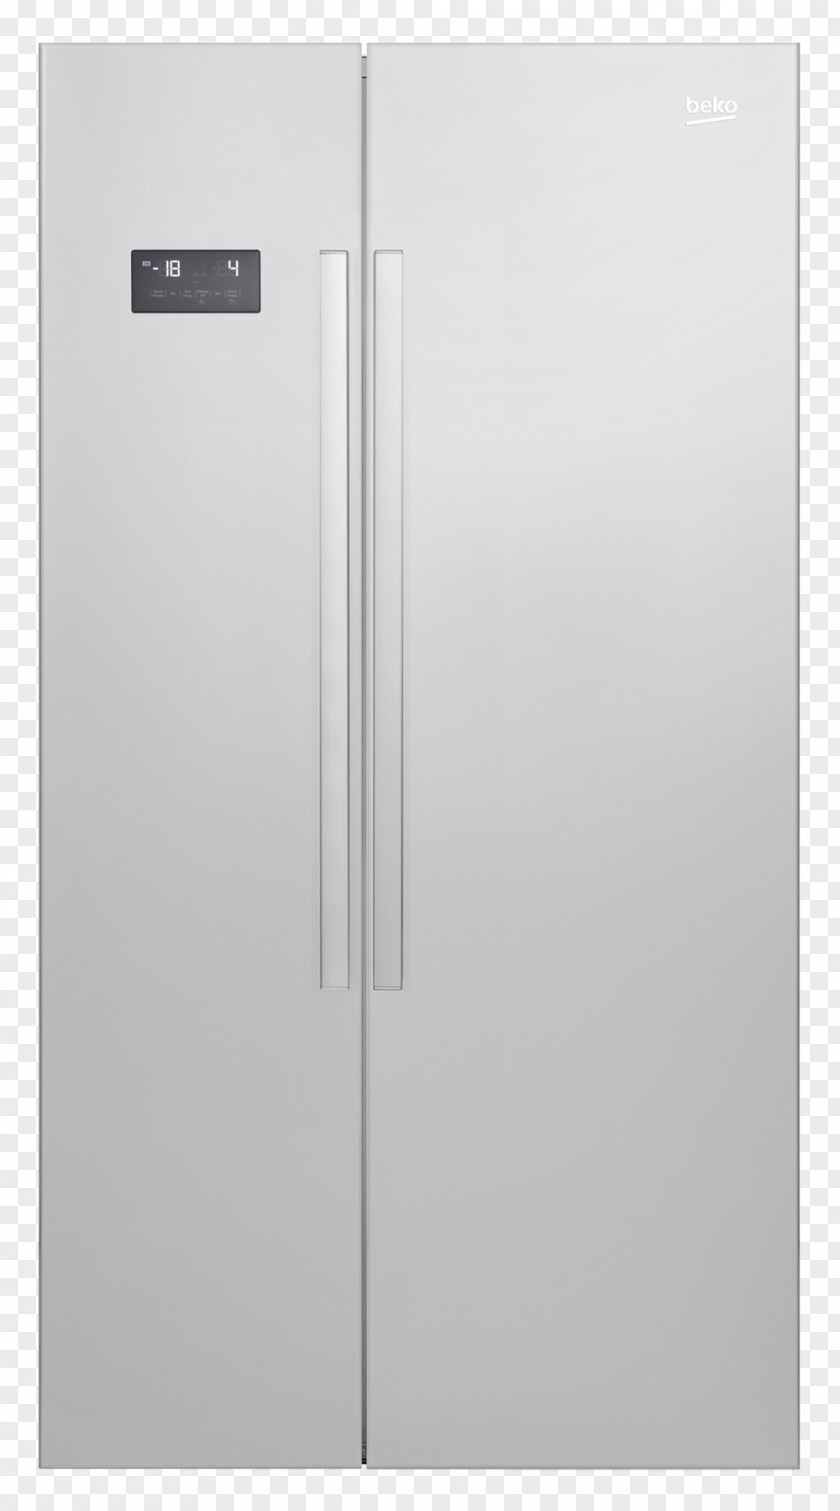 Freezer Refrigerator Beko Auto-defrost Freezers Major Appliance PNG